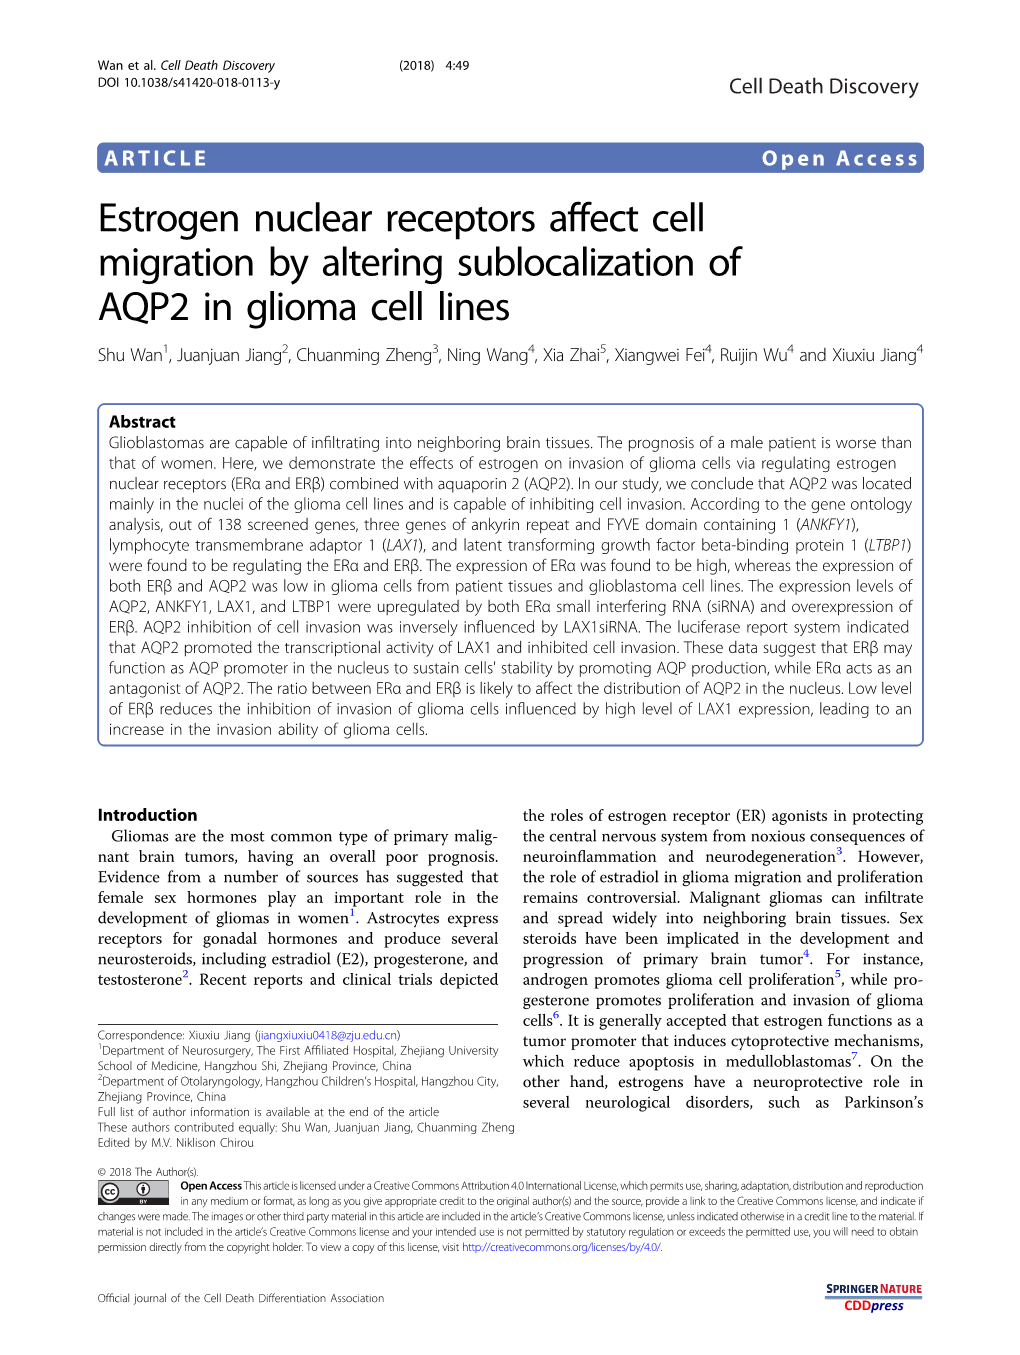 Estrogen Nuclear Receptors Affect Cell Migration by Altering